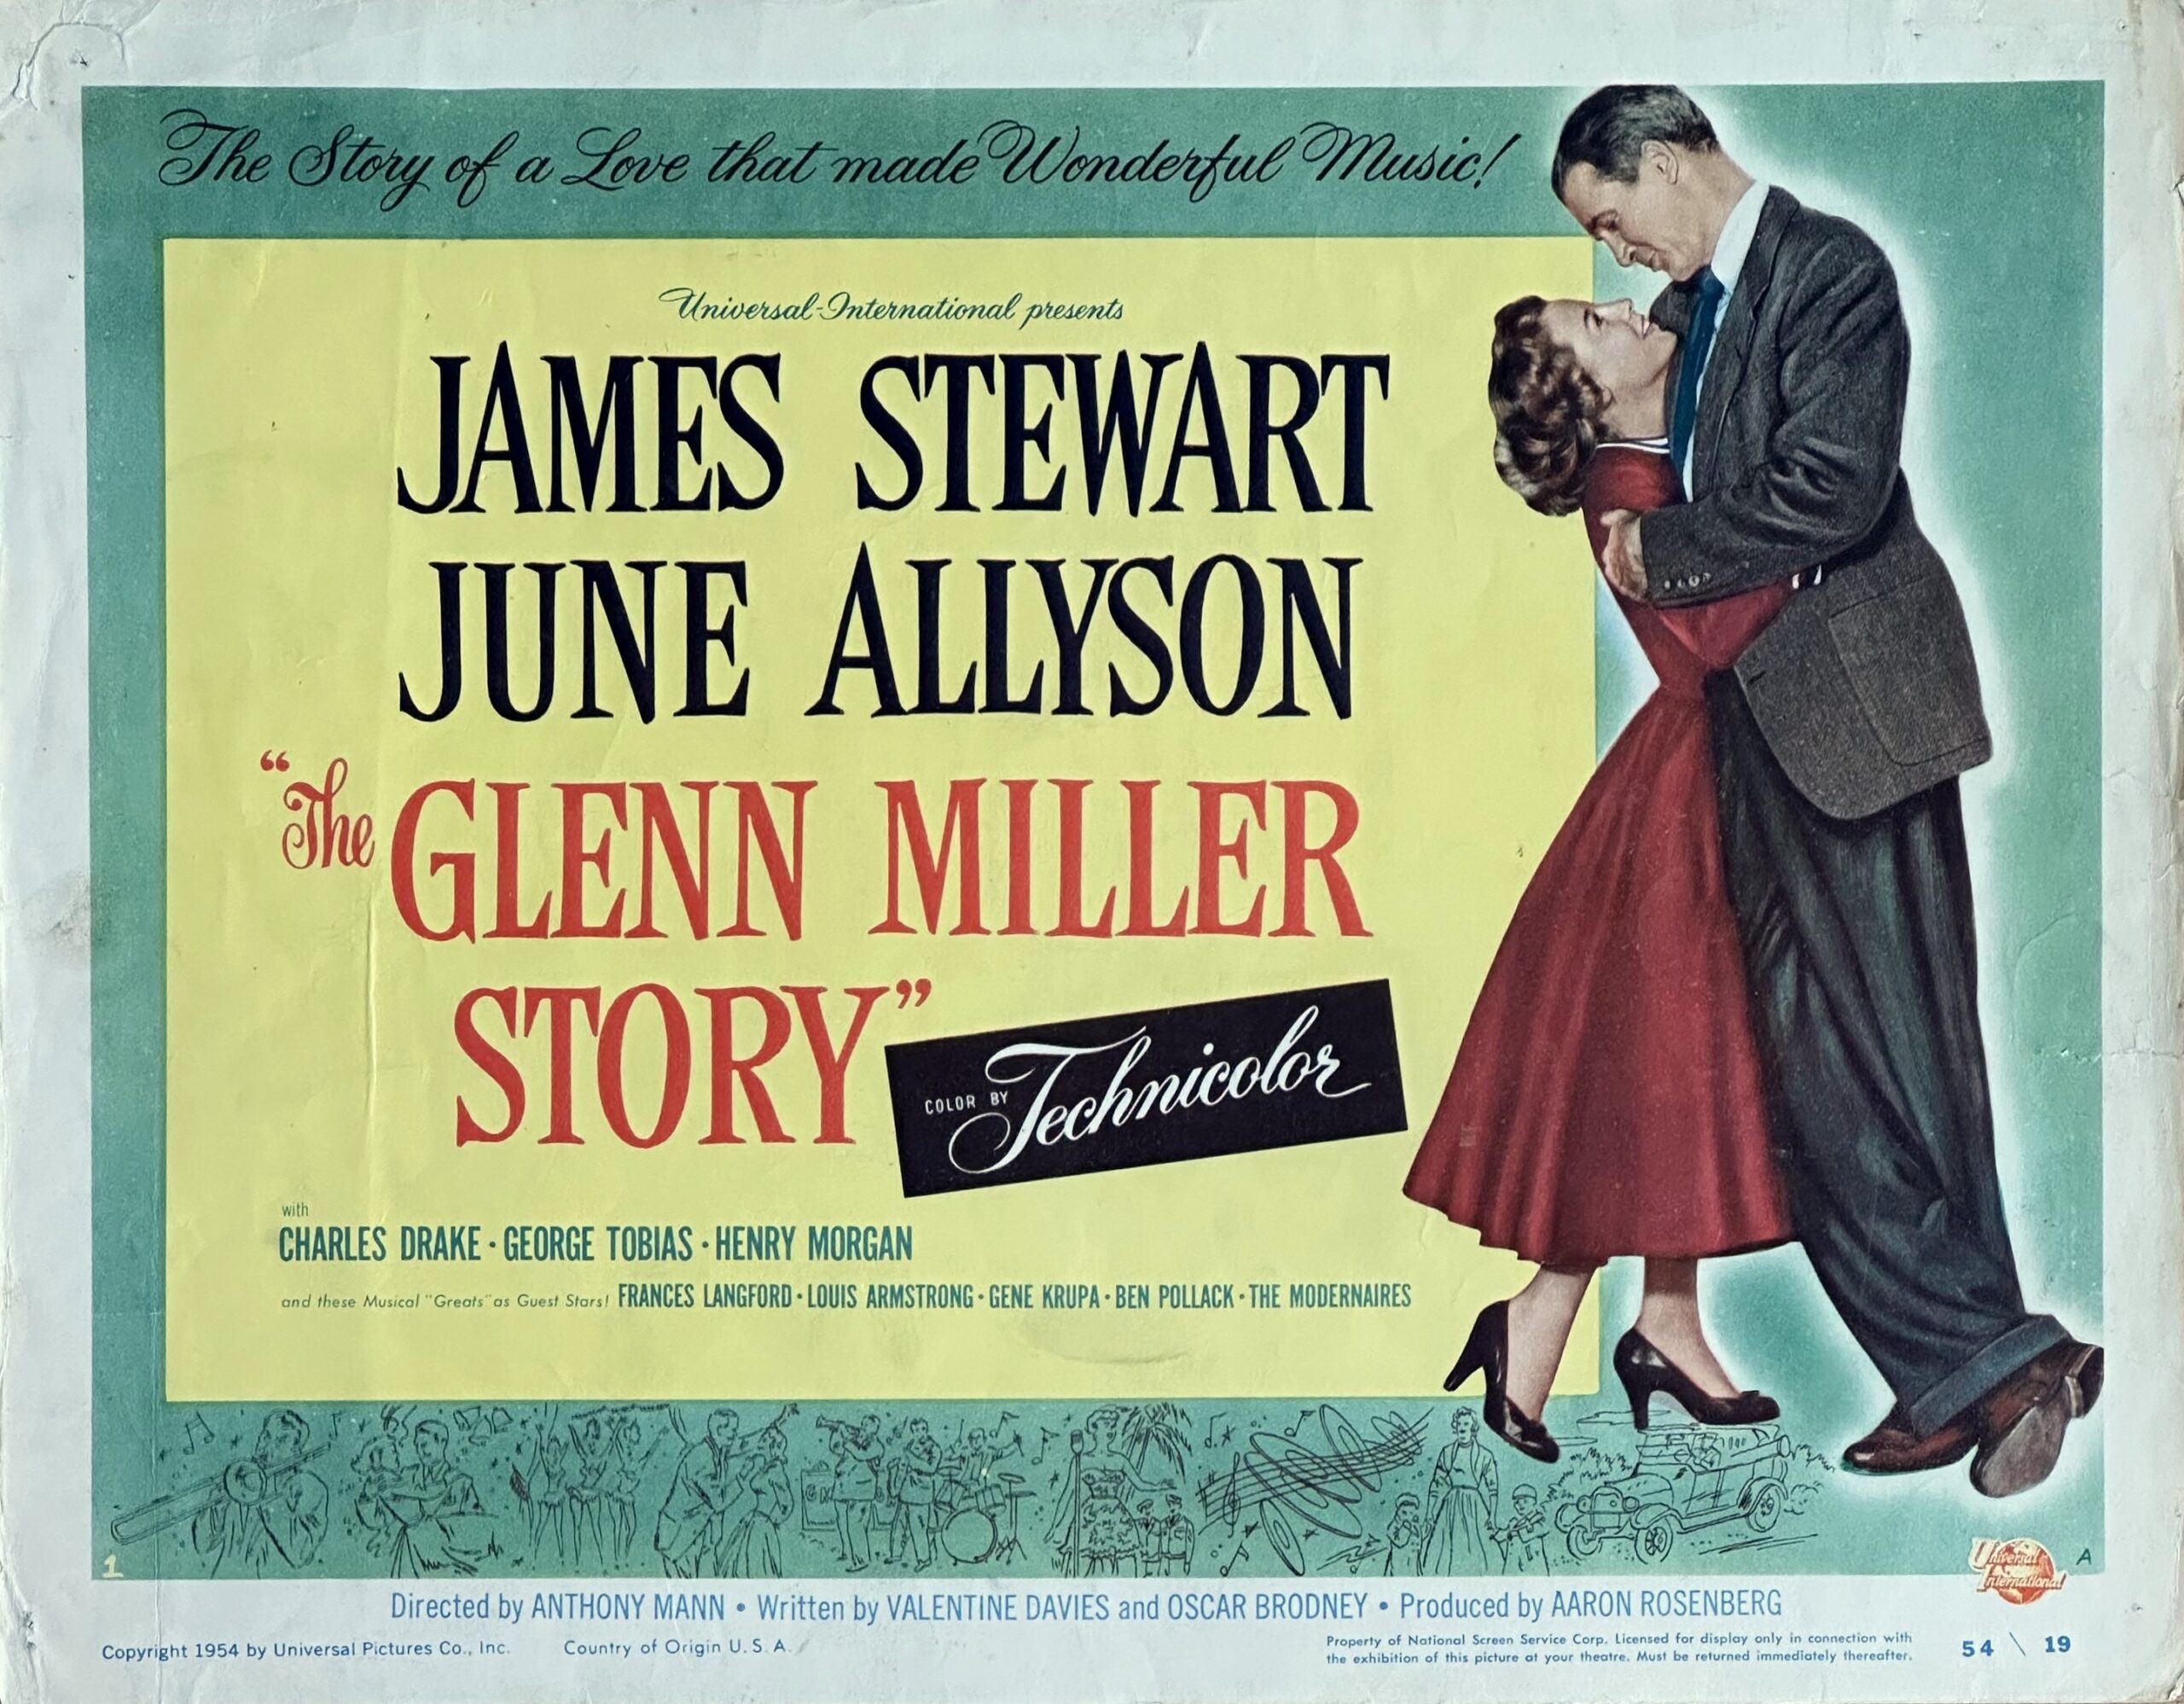 Original vintage cinema lobby card movie poster for James Stewart in The Glenn Miller Story